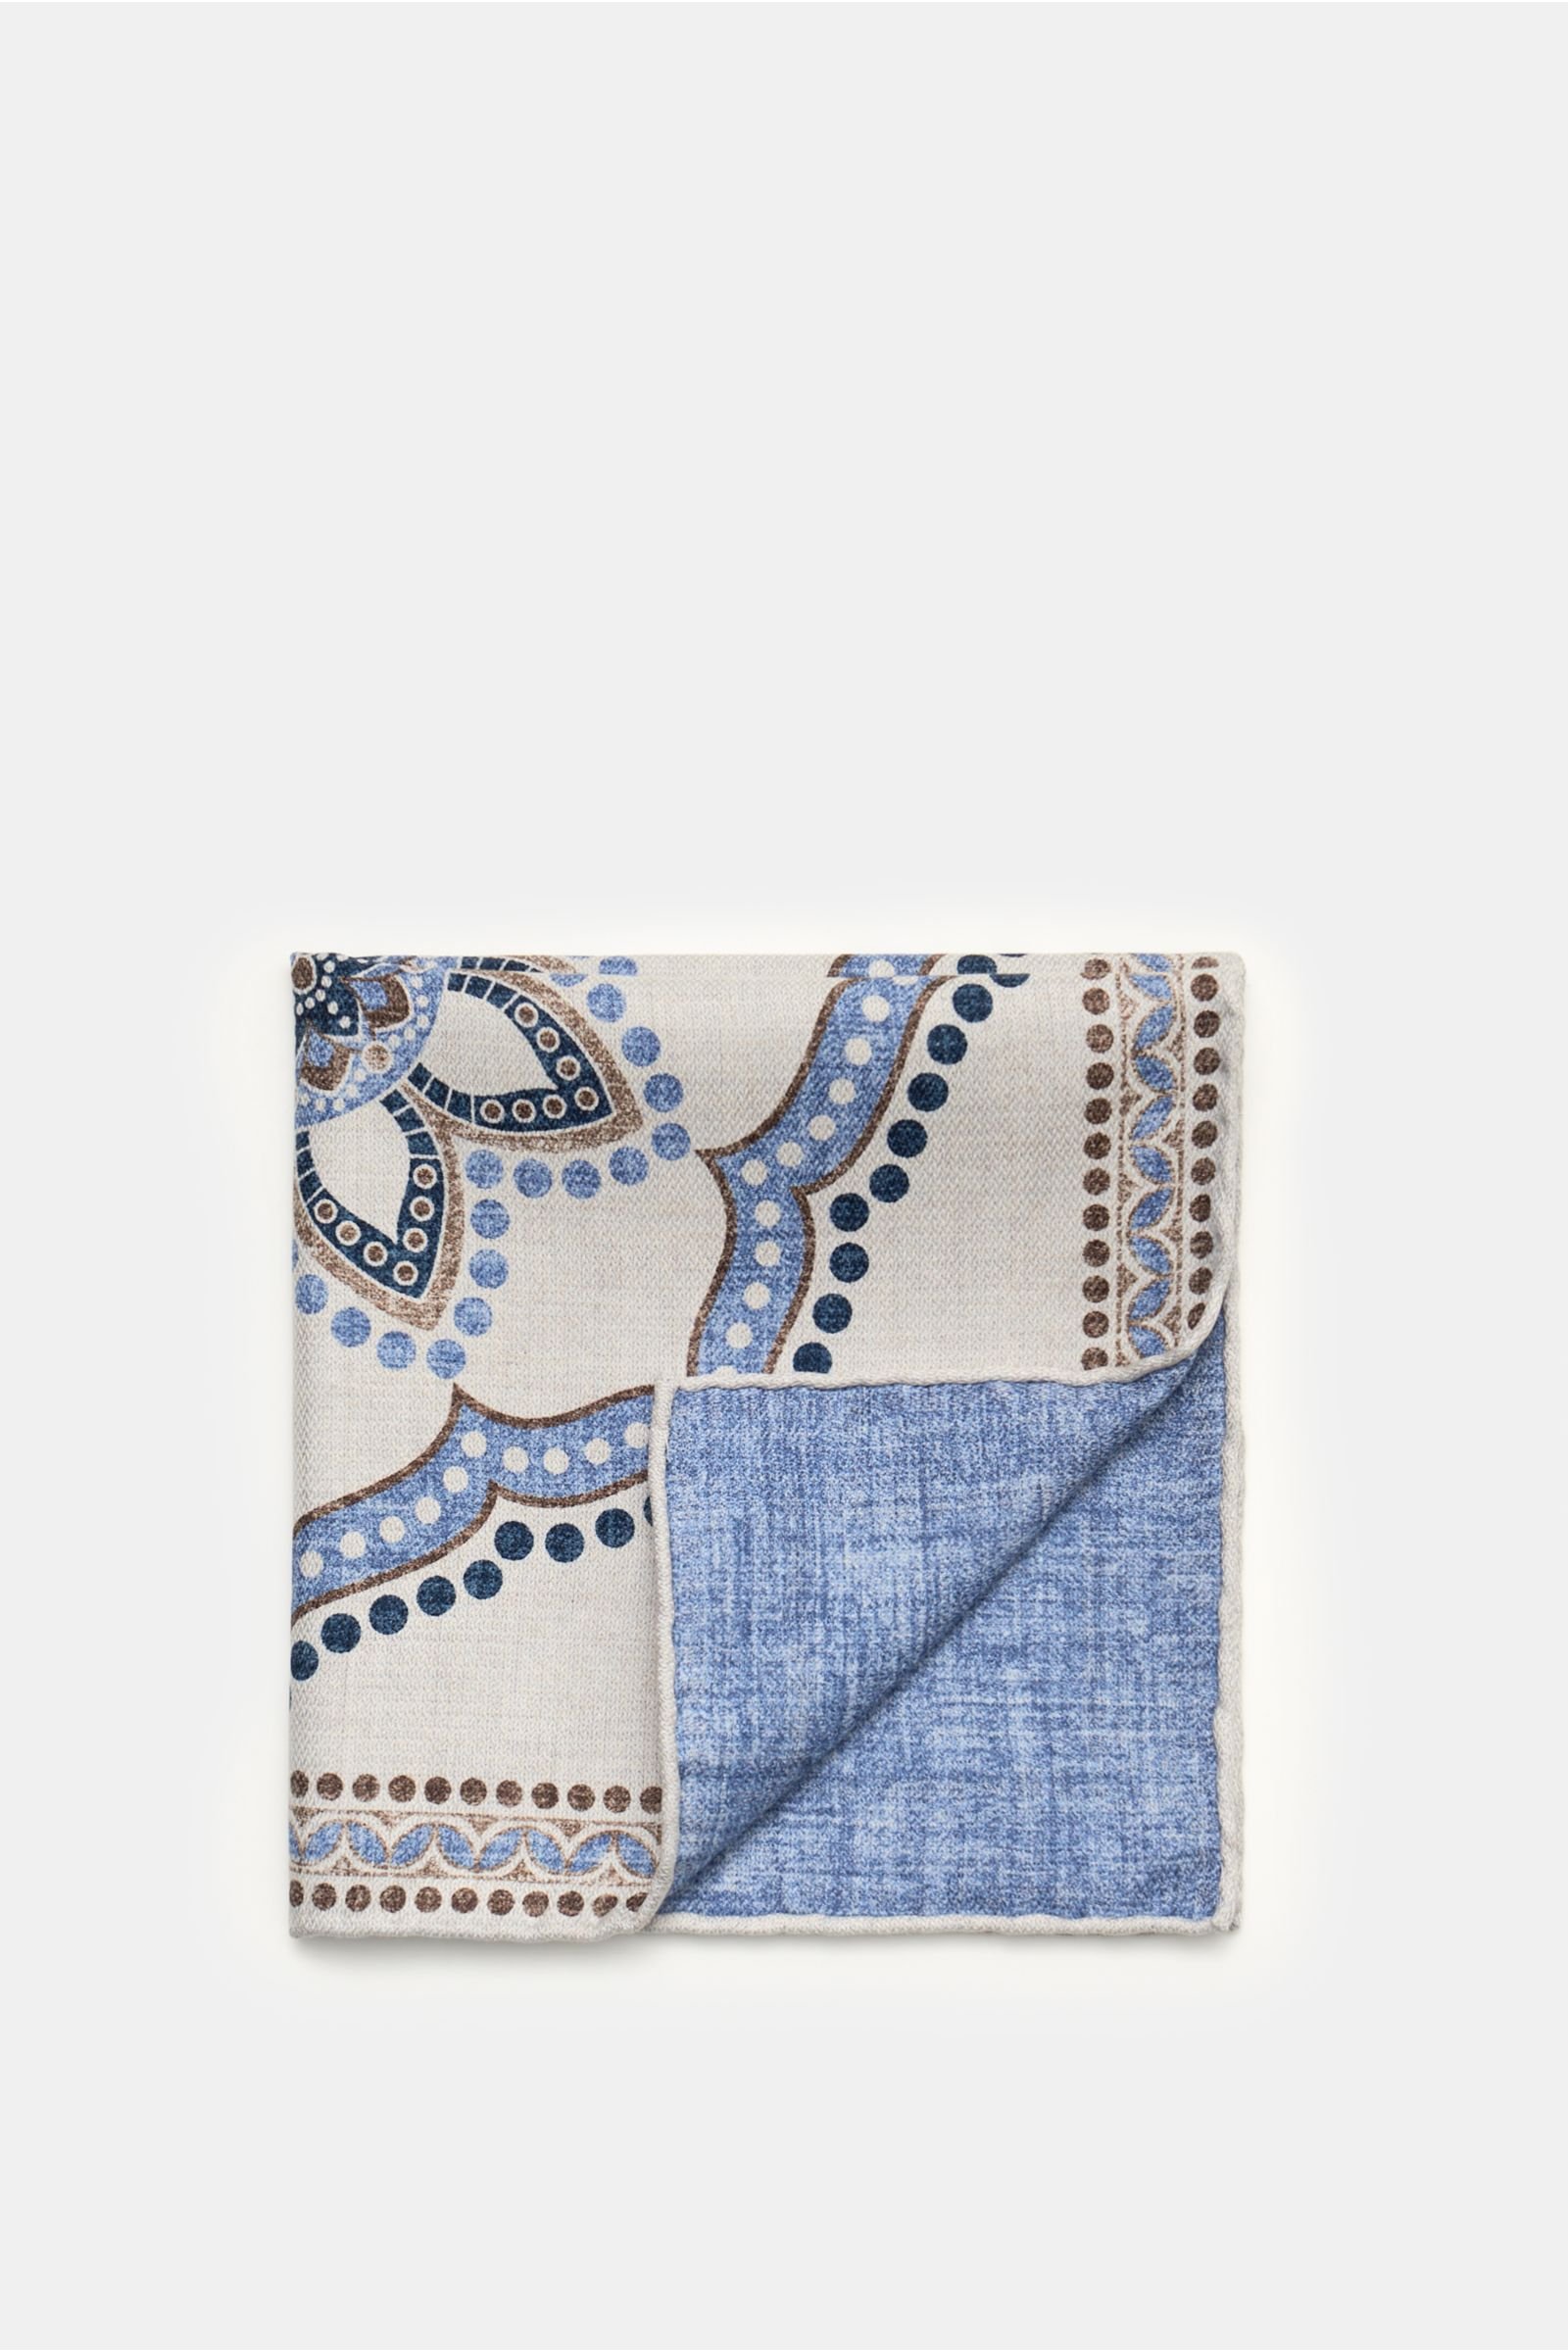 Pocket square cream/smoky blue patterned